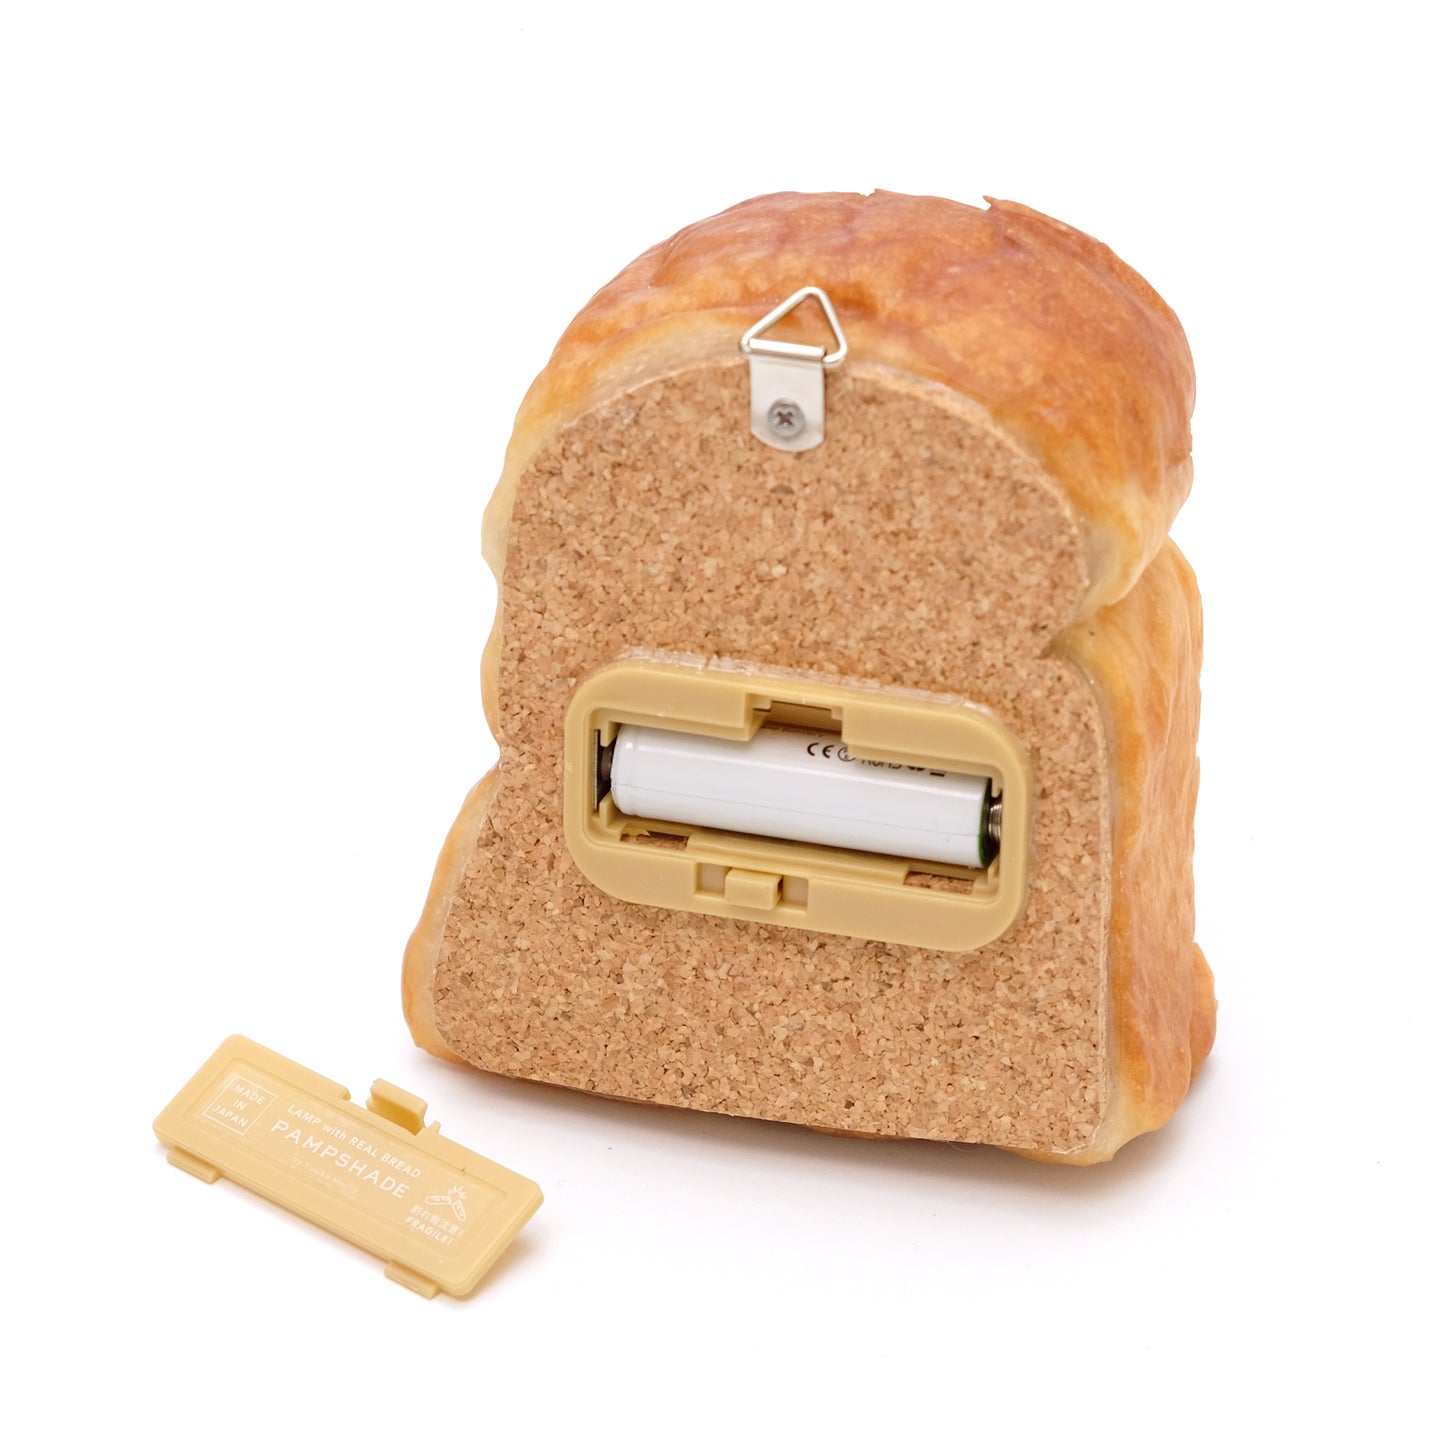 Toast-B Bread Lamp (Battery Powered LED Light)